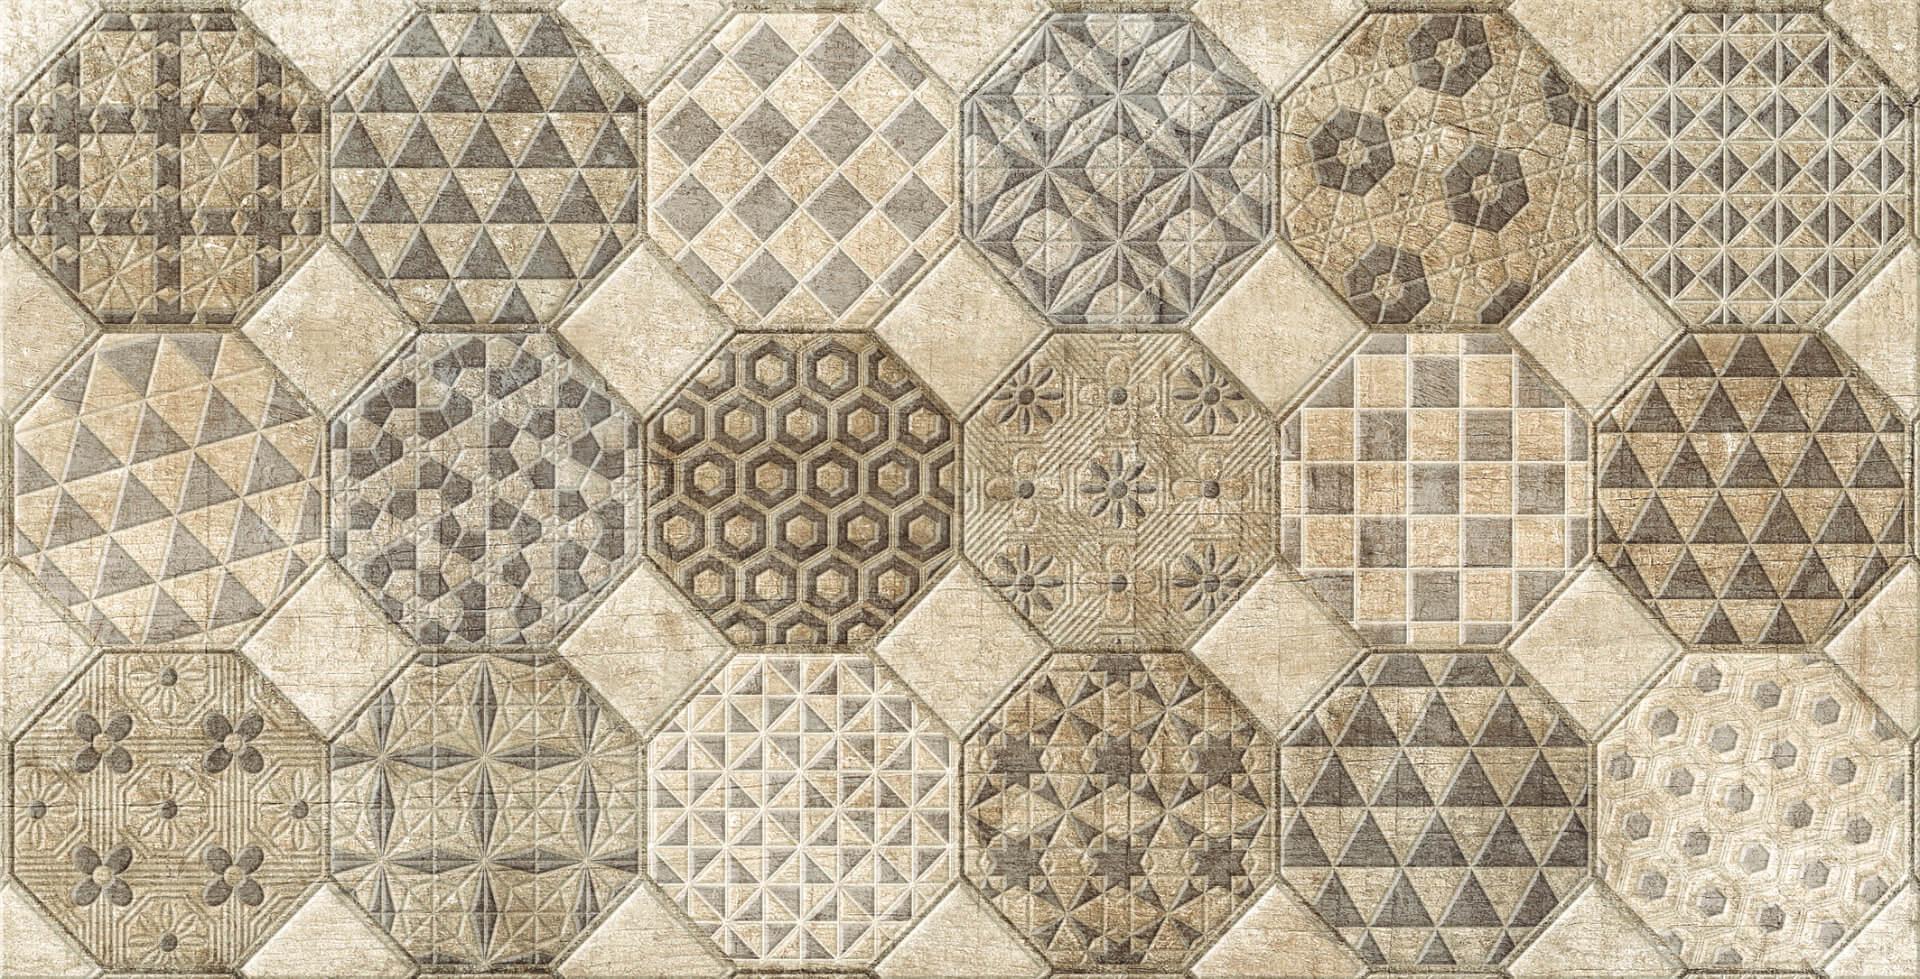 Geometric Tiles for Bathroom Tiles, Kitchen Tiles, Accent Tiles